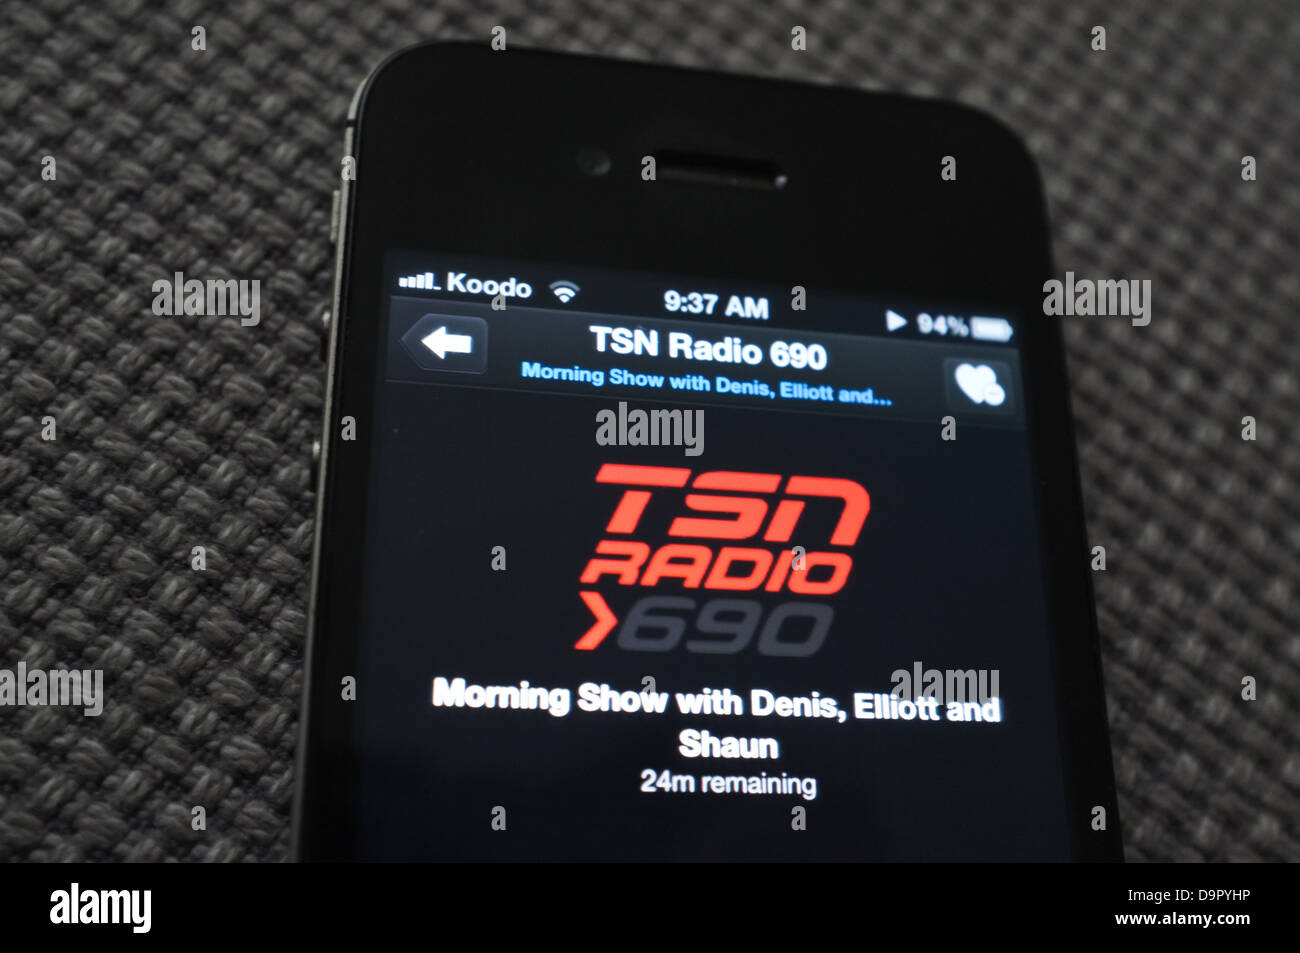 TSN 690 radio on an Apple iPhone Stock Photo - Alamy